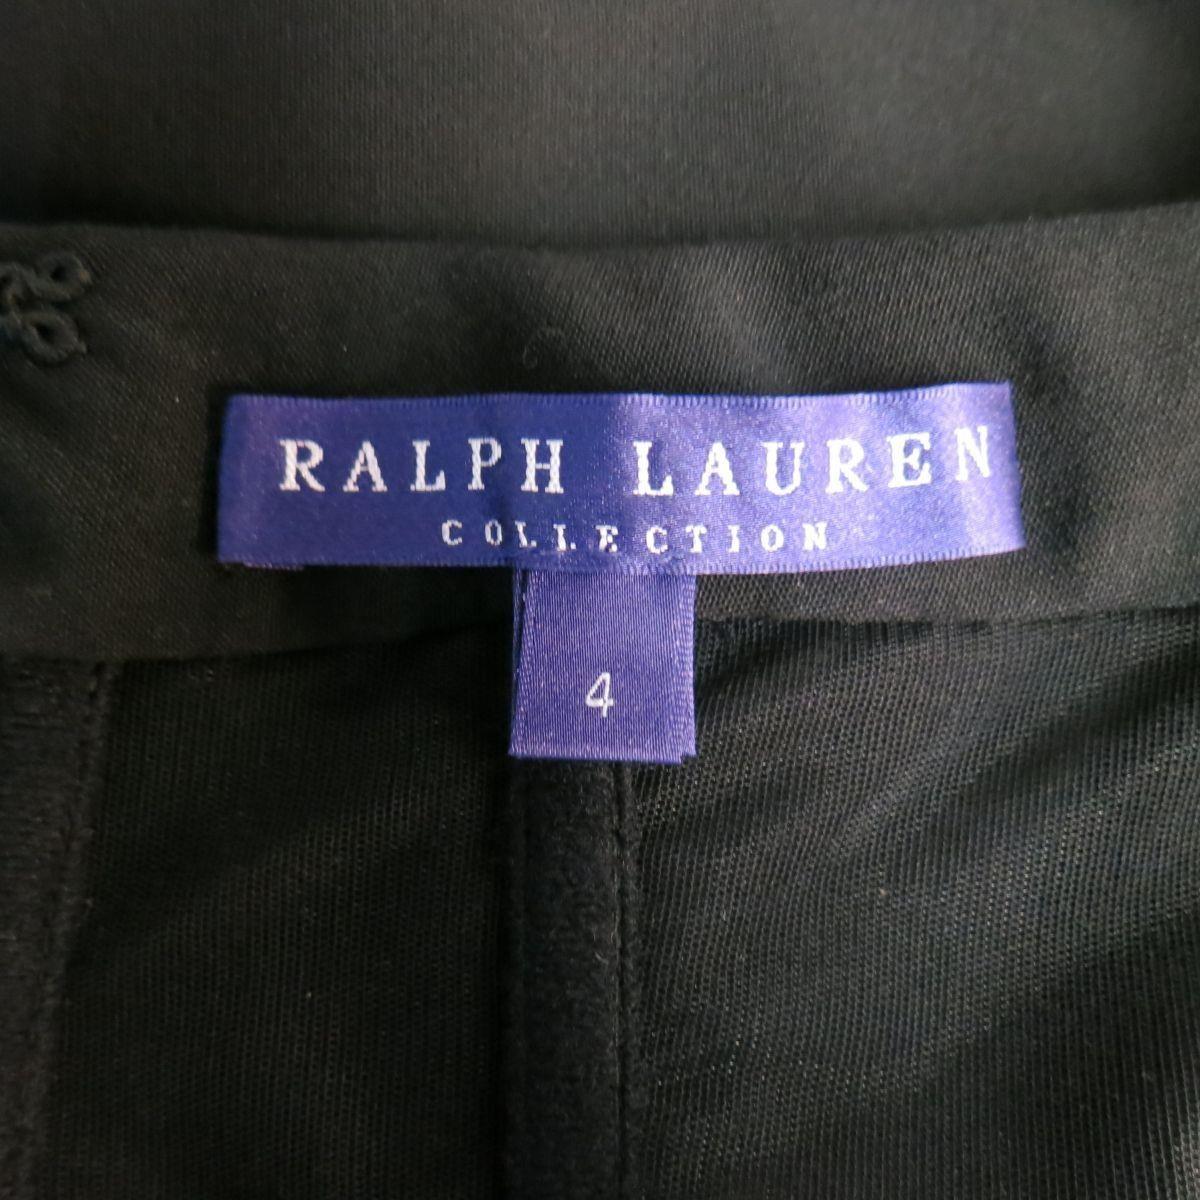 RALPH LAUREN COLLECTION Megan Fall 2012 US 4 Black Wool Leather Sleeve Dress 1